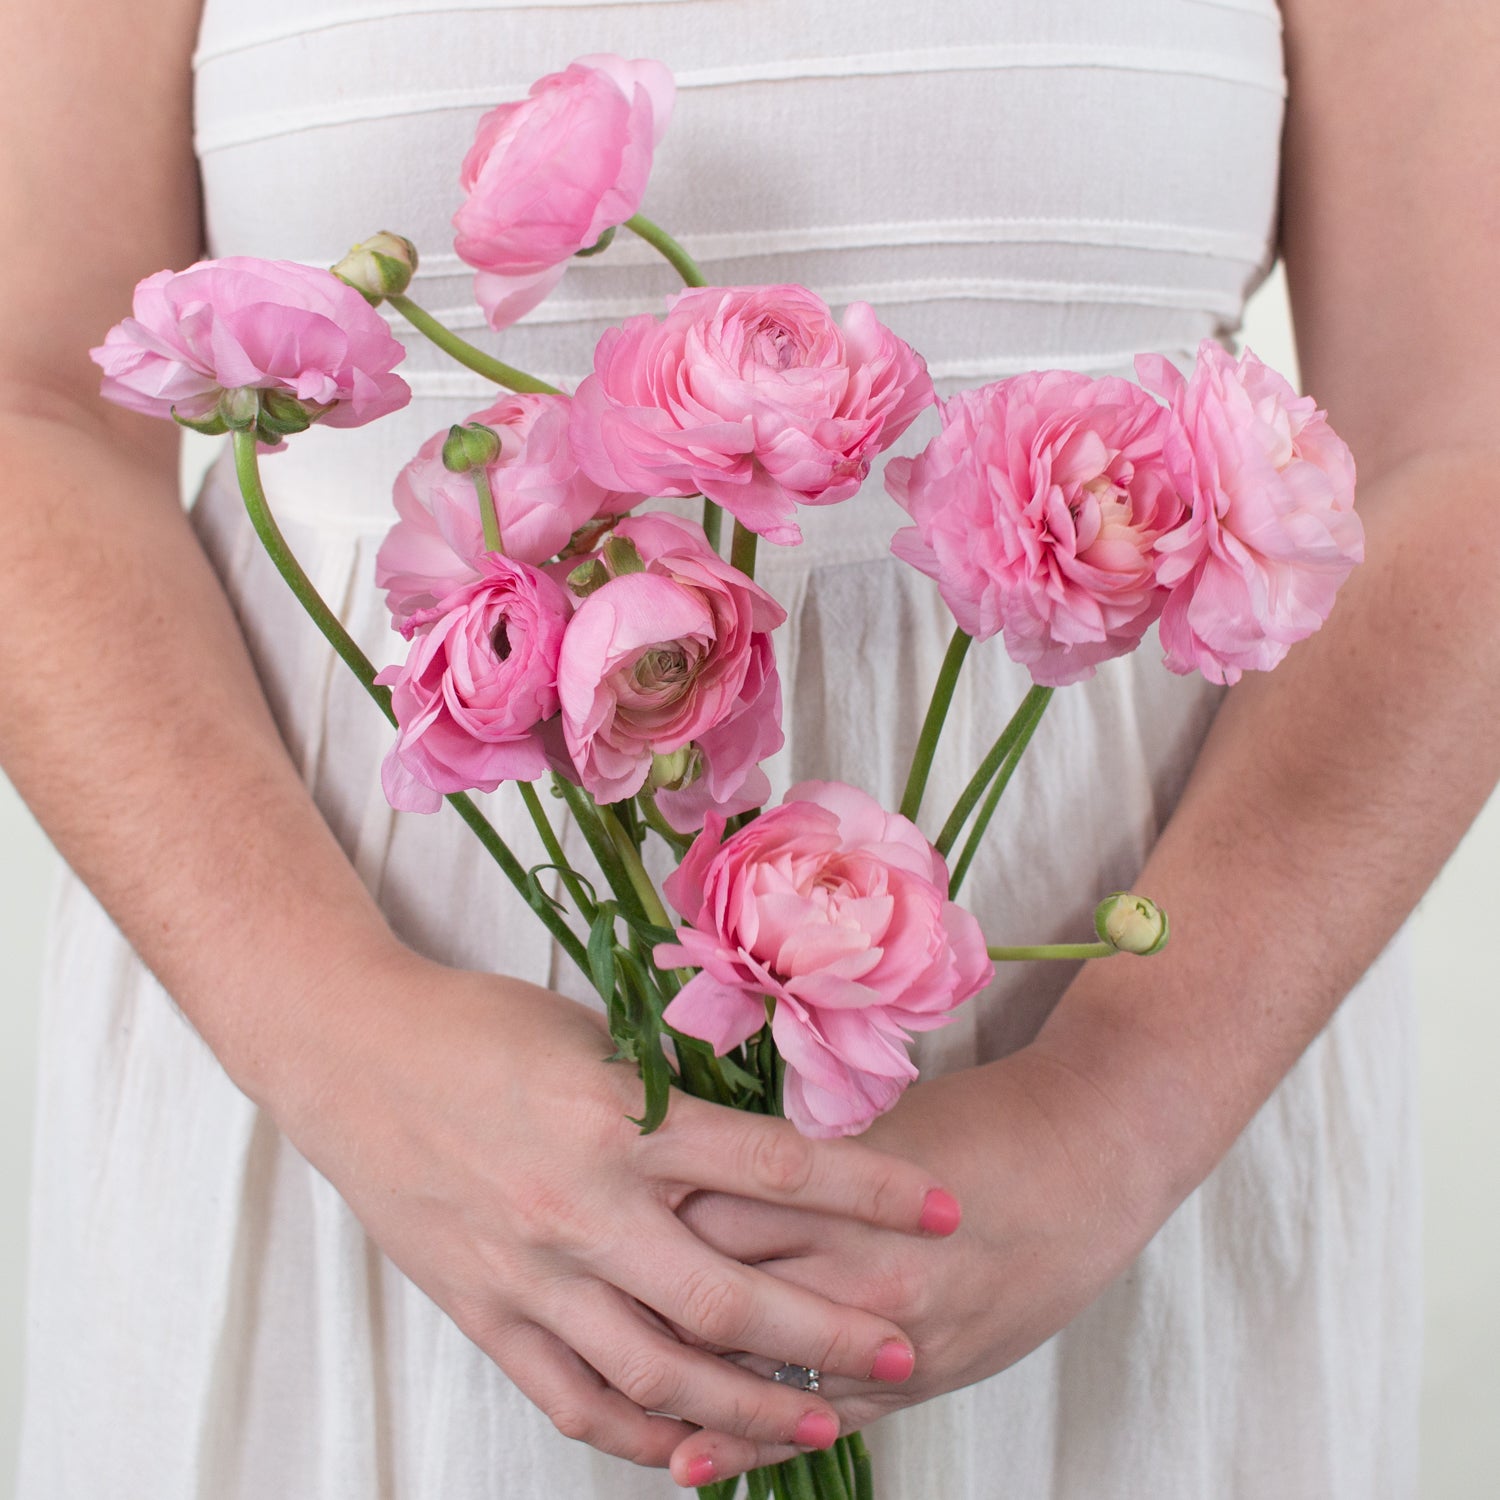 Azalea Pink Double-Faced Satin Bouquet Ribbon – Flower Moxie Supply